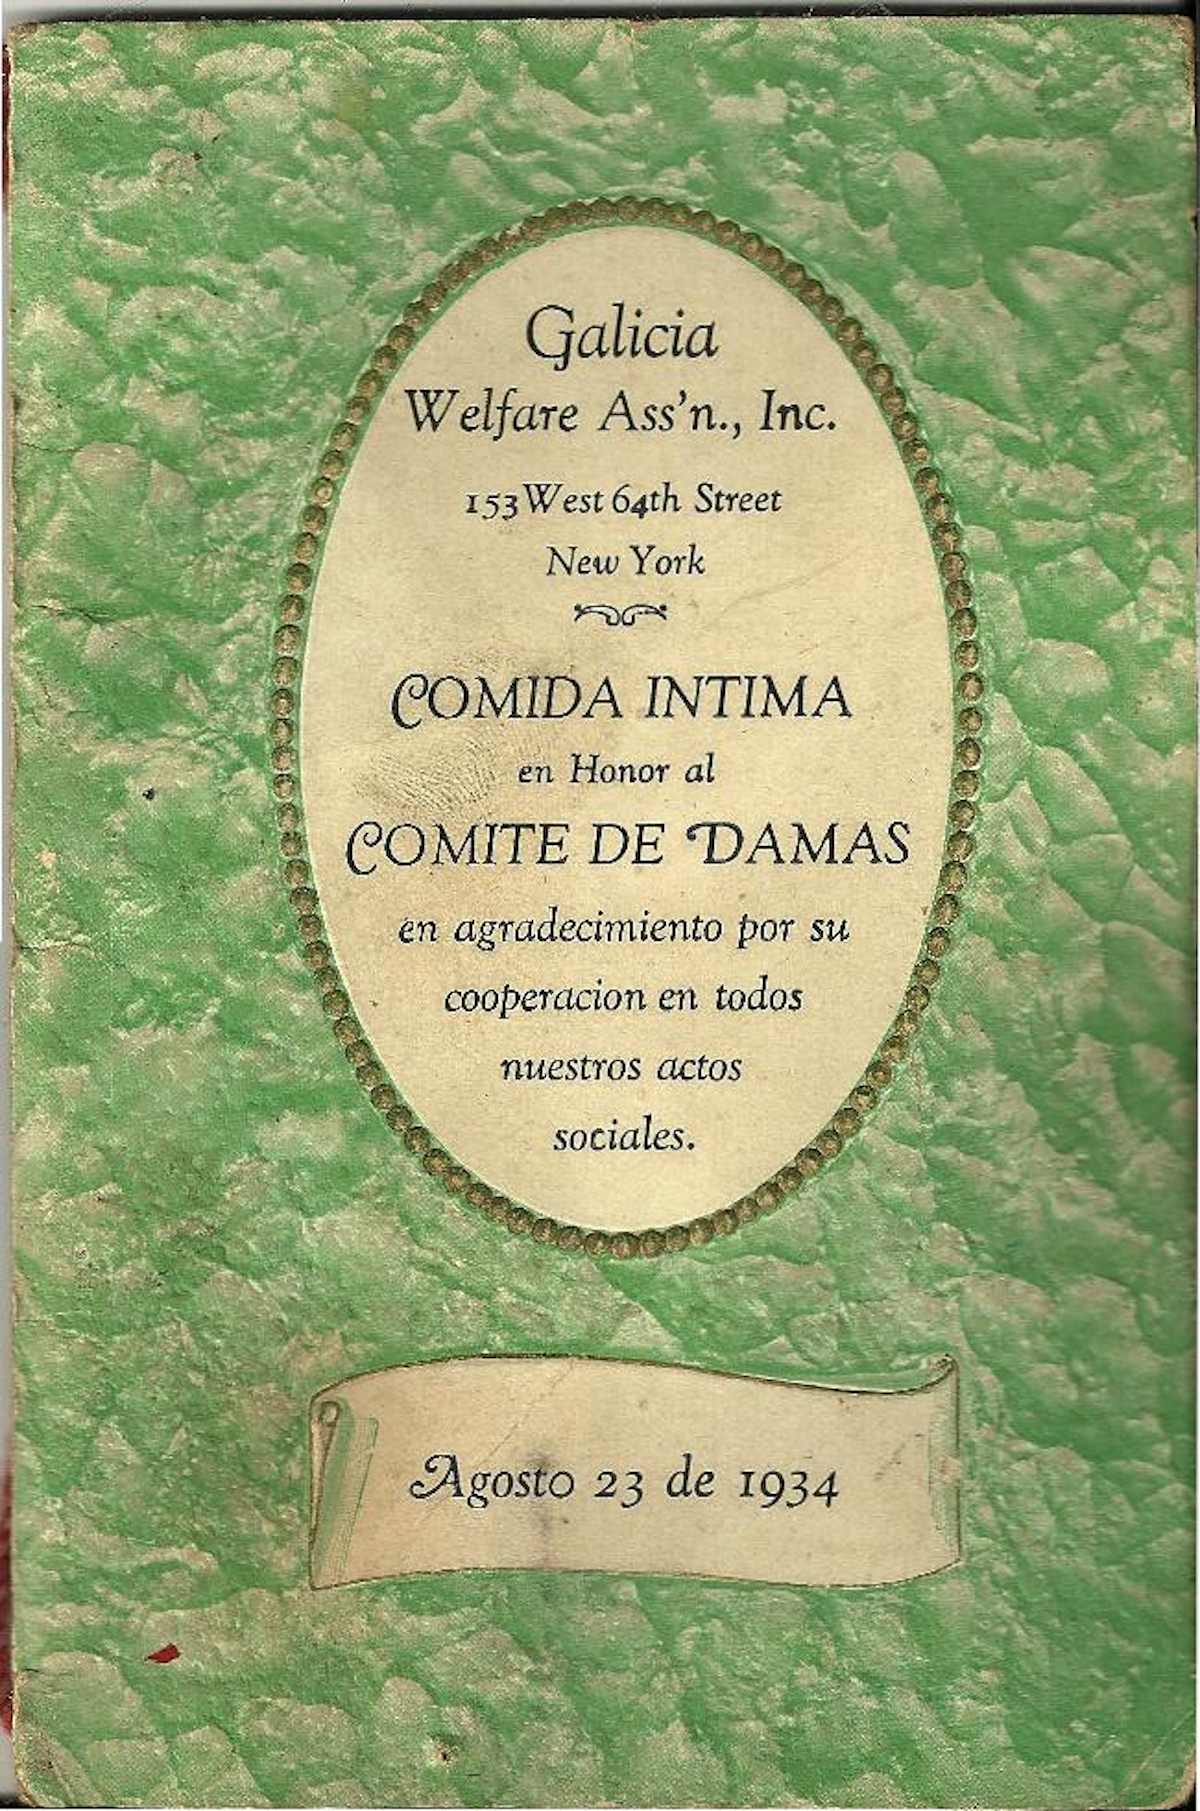 Invitation to a dinner honouring the Ladies Committee of Unión del Porvenir de Taborda e Piñeiro, New York (1934) (courtesy of Natalia Jorge)